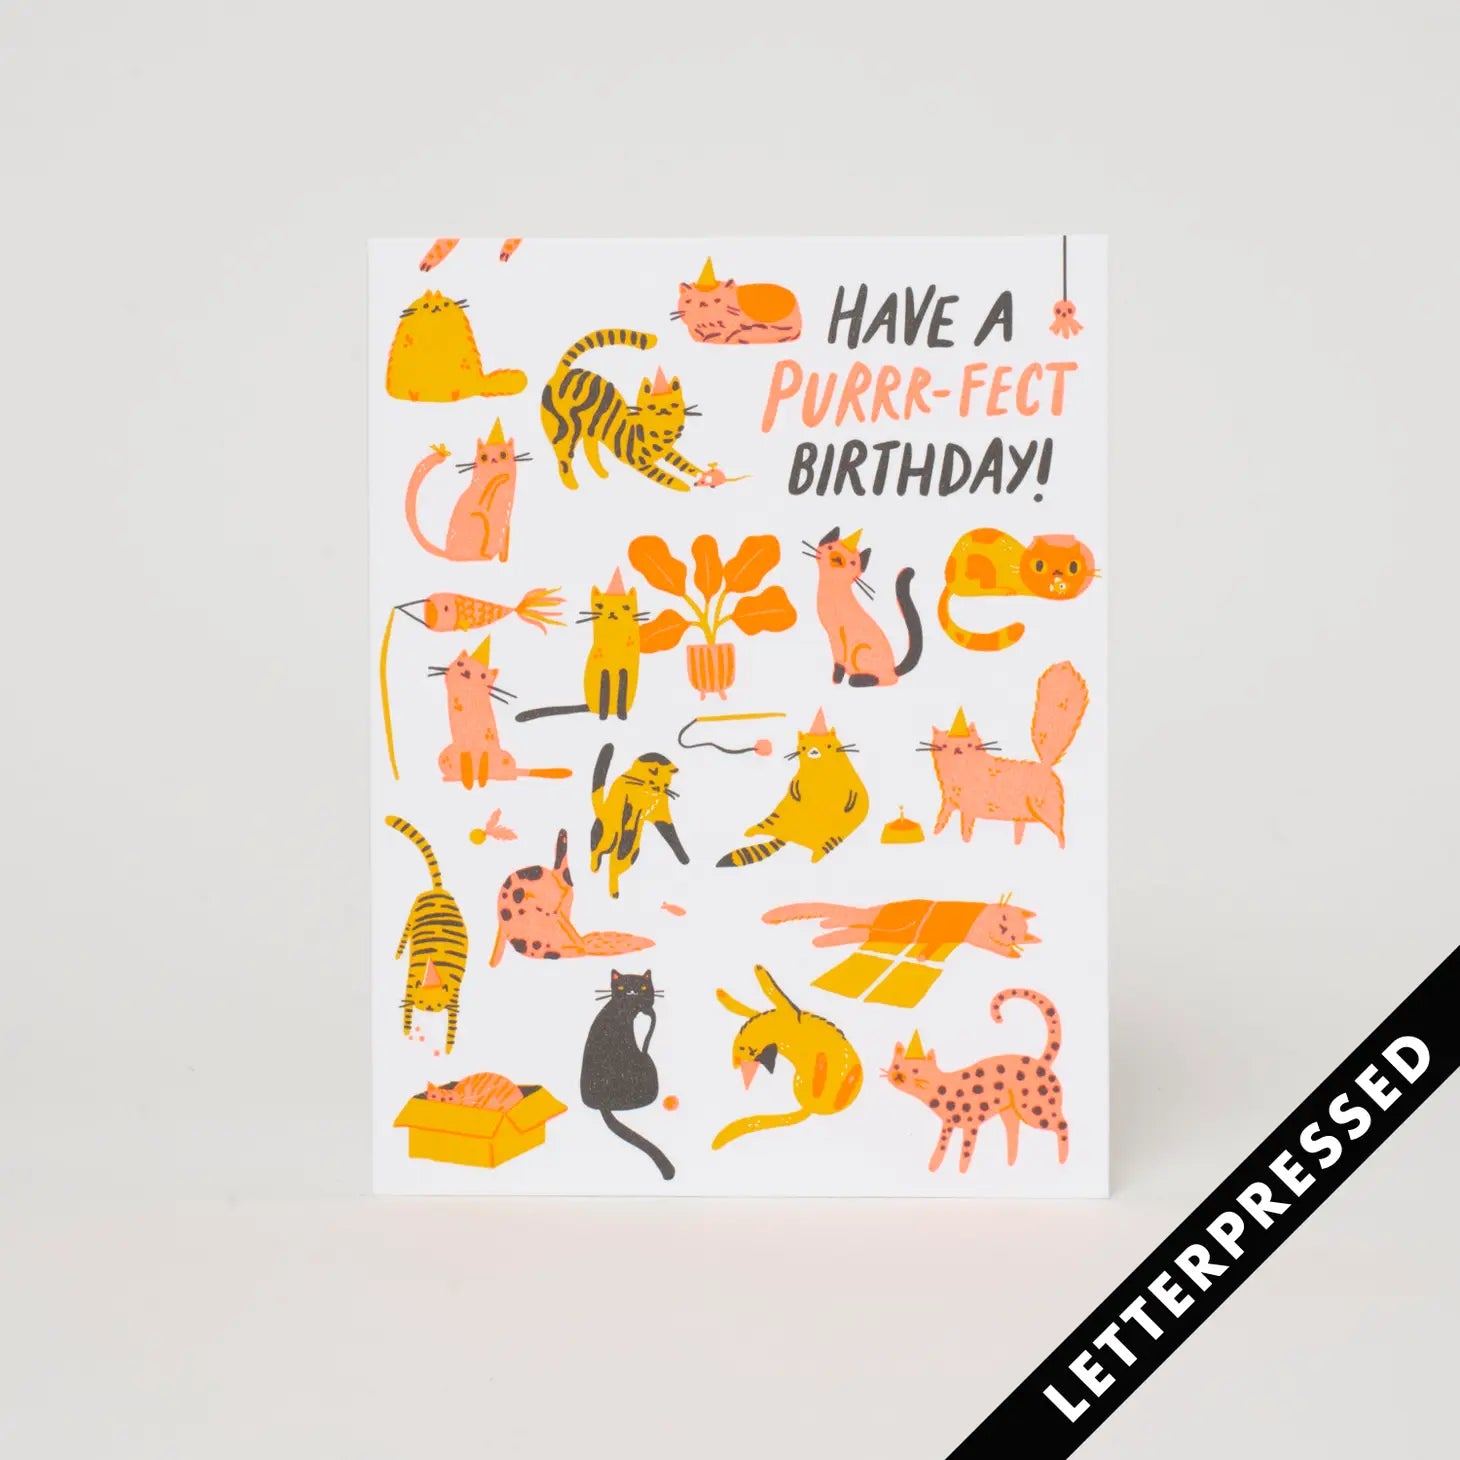 Egg Press Greeting Card - Purr-fect Birthday